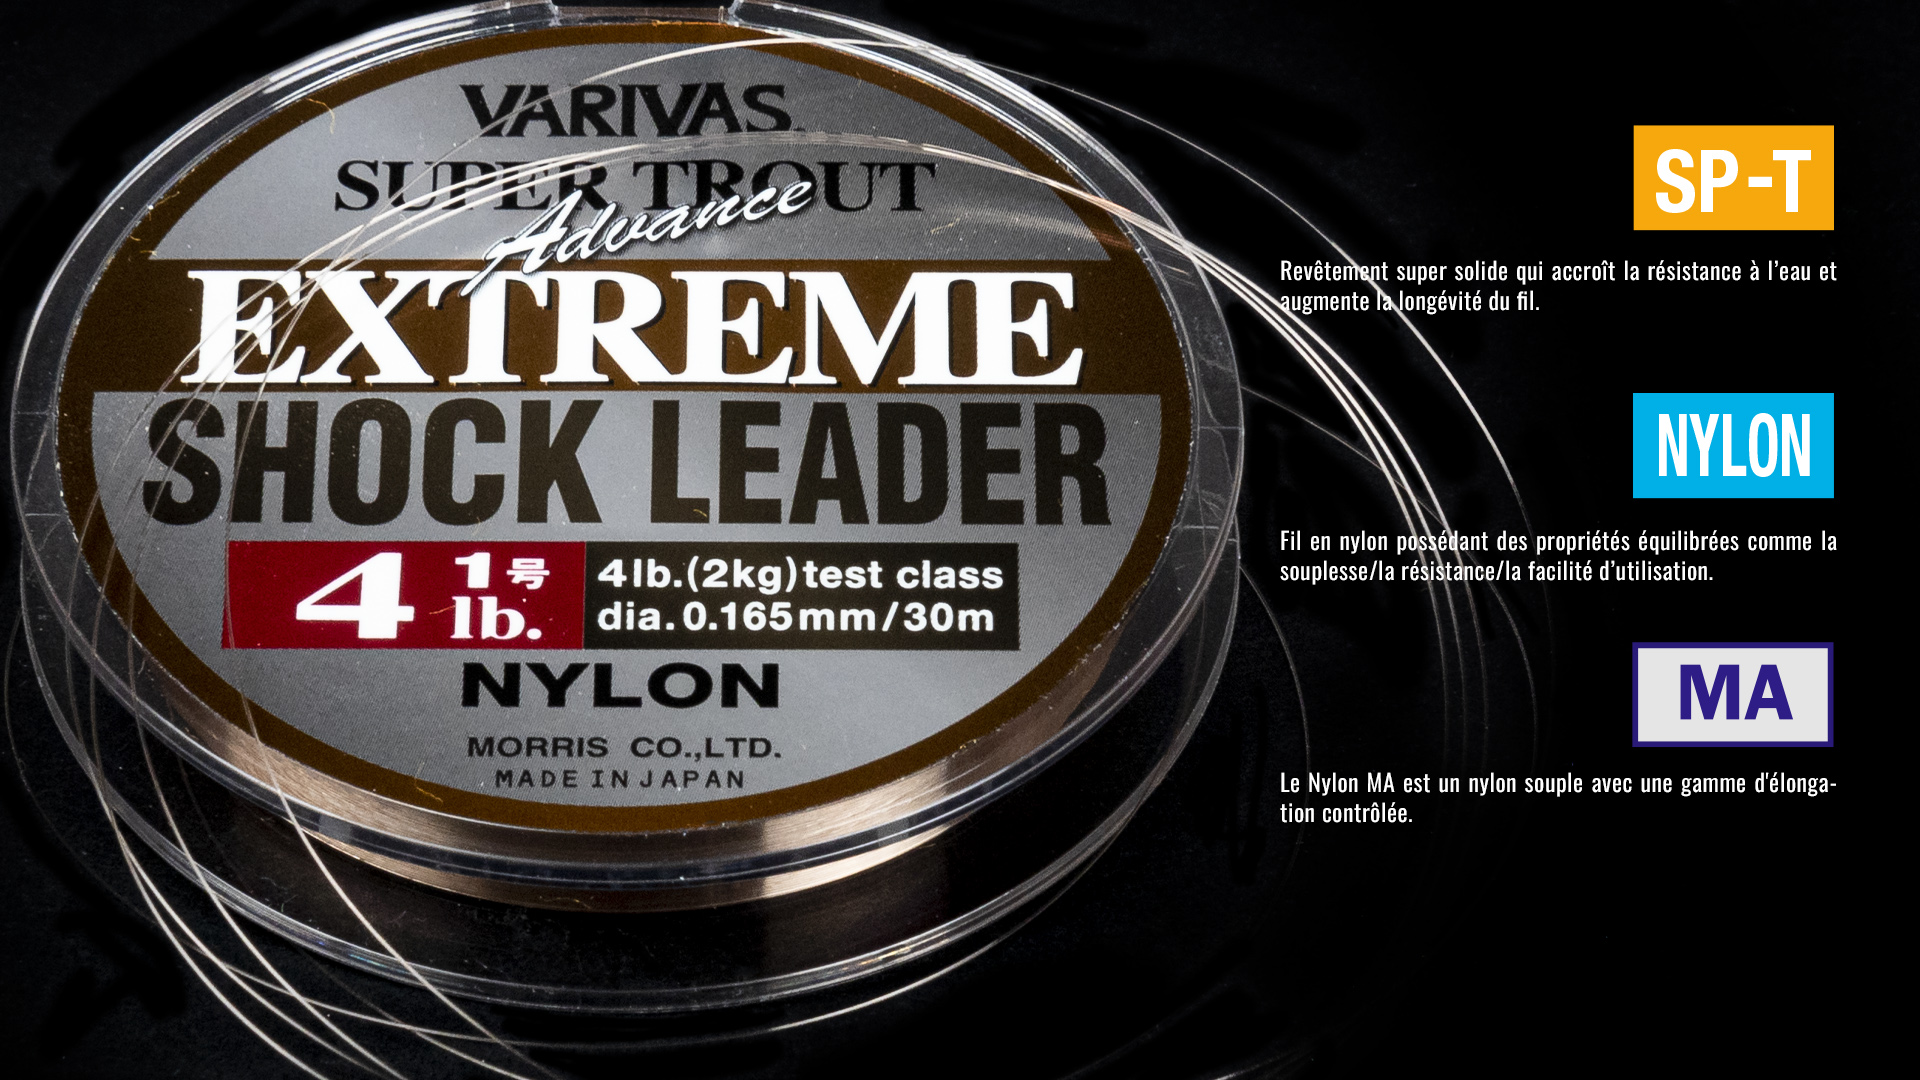 Varivas Super Trout Advance Extreme Shock Leader Nylon – Way Of